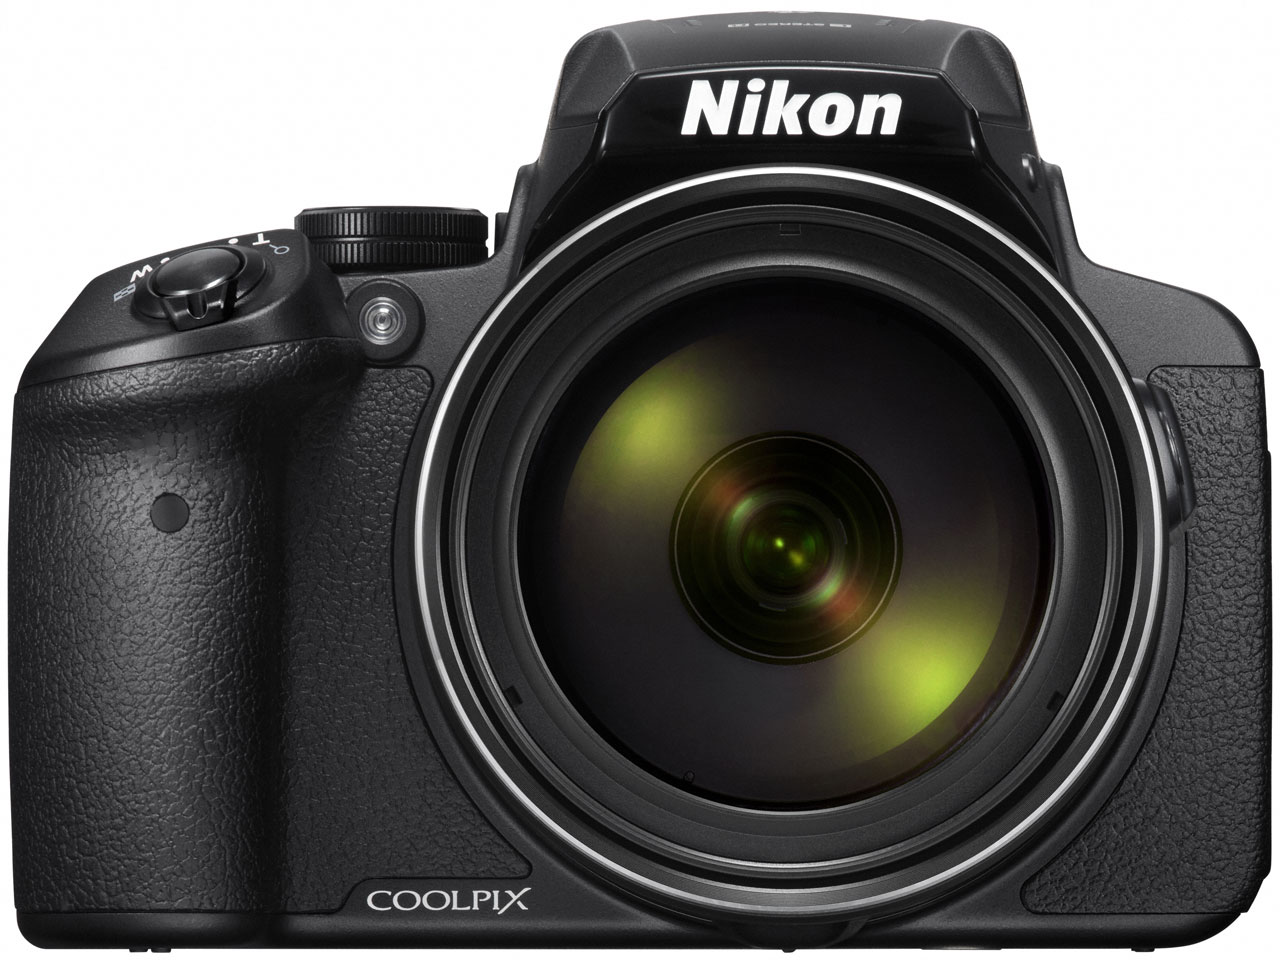 Nikon(ニコン) COOLPIX P900［ブラック］光学83倍ズームの超高倍率コンパ…...:lcs-live:10002947